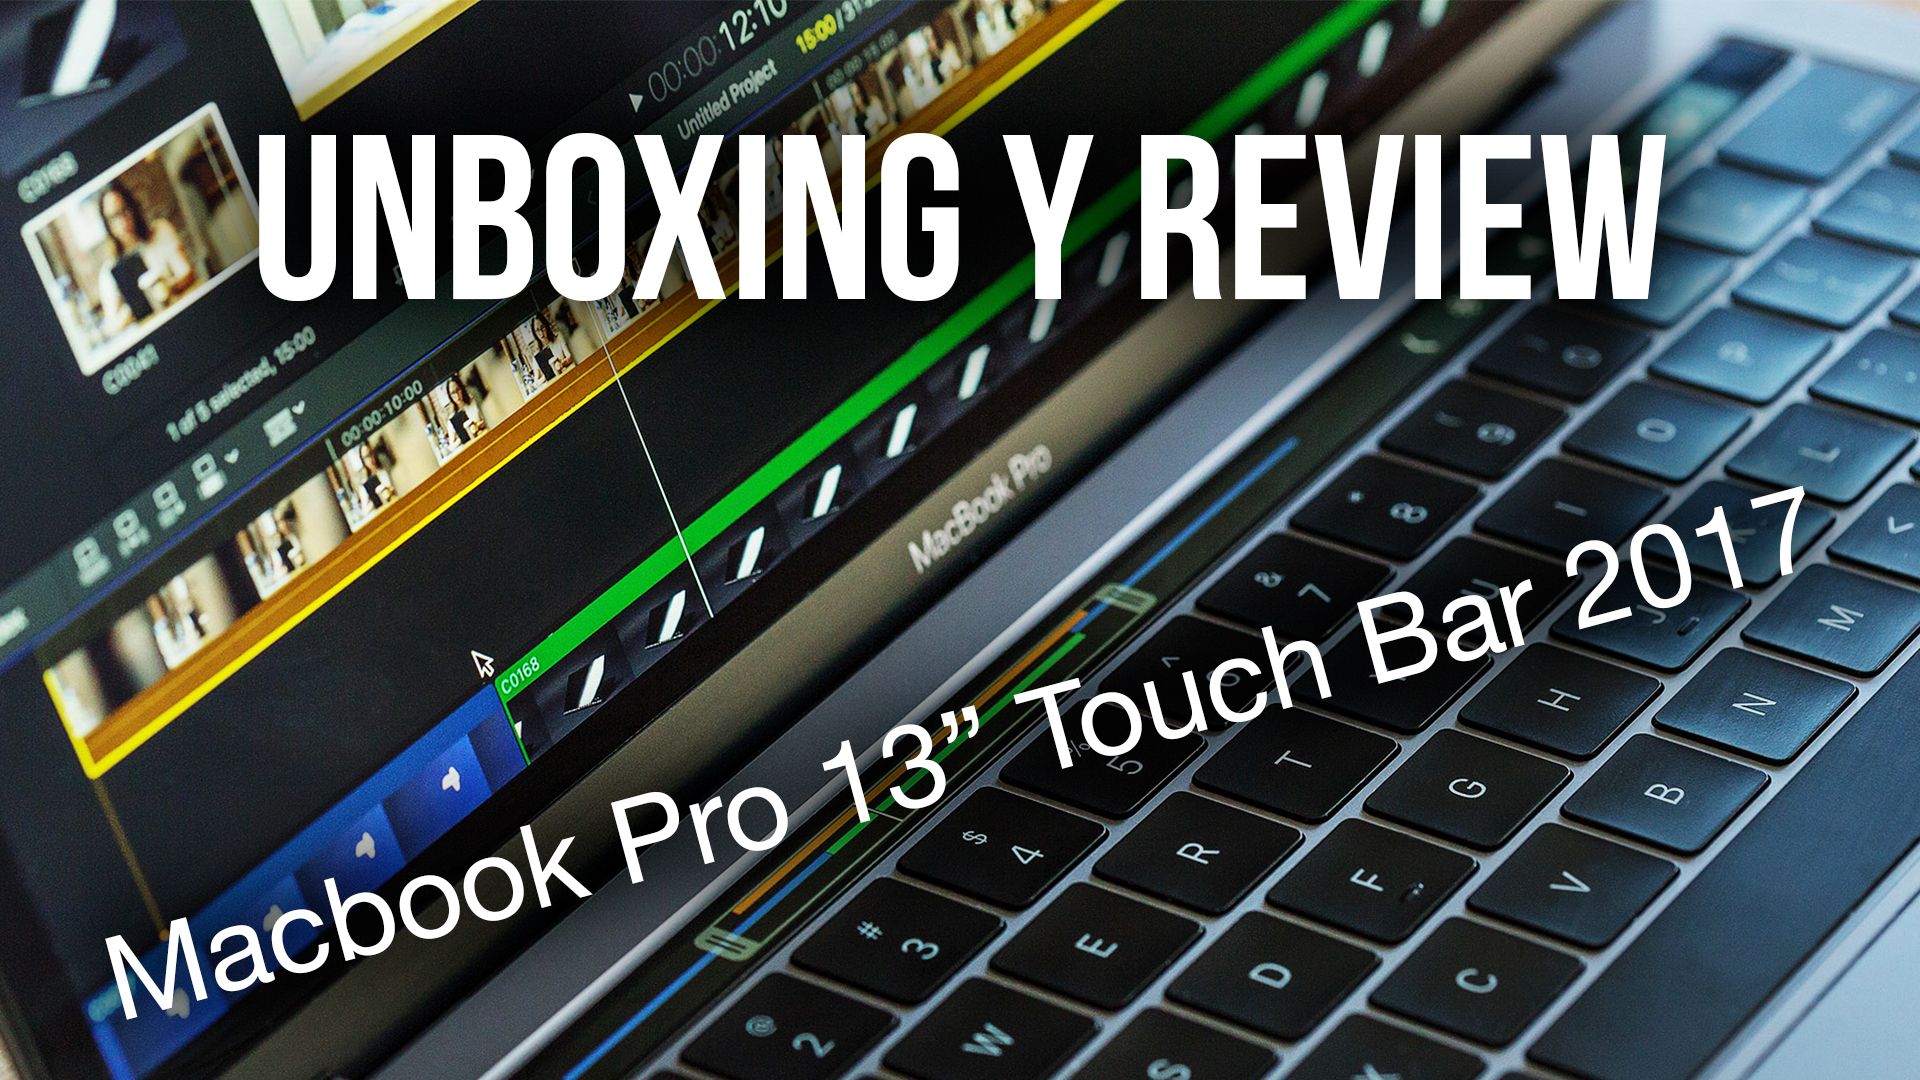 Apple Macbook Pro TouchBar 2017 – Unboxing y Review en Español (Spanish)